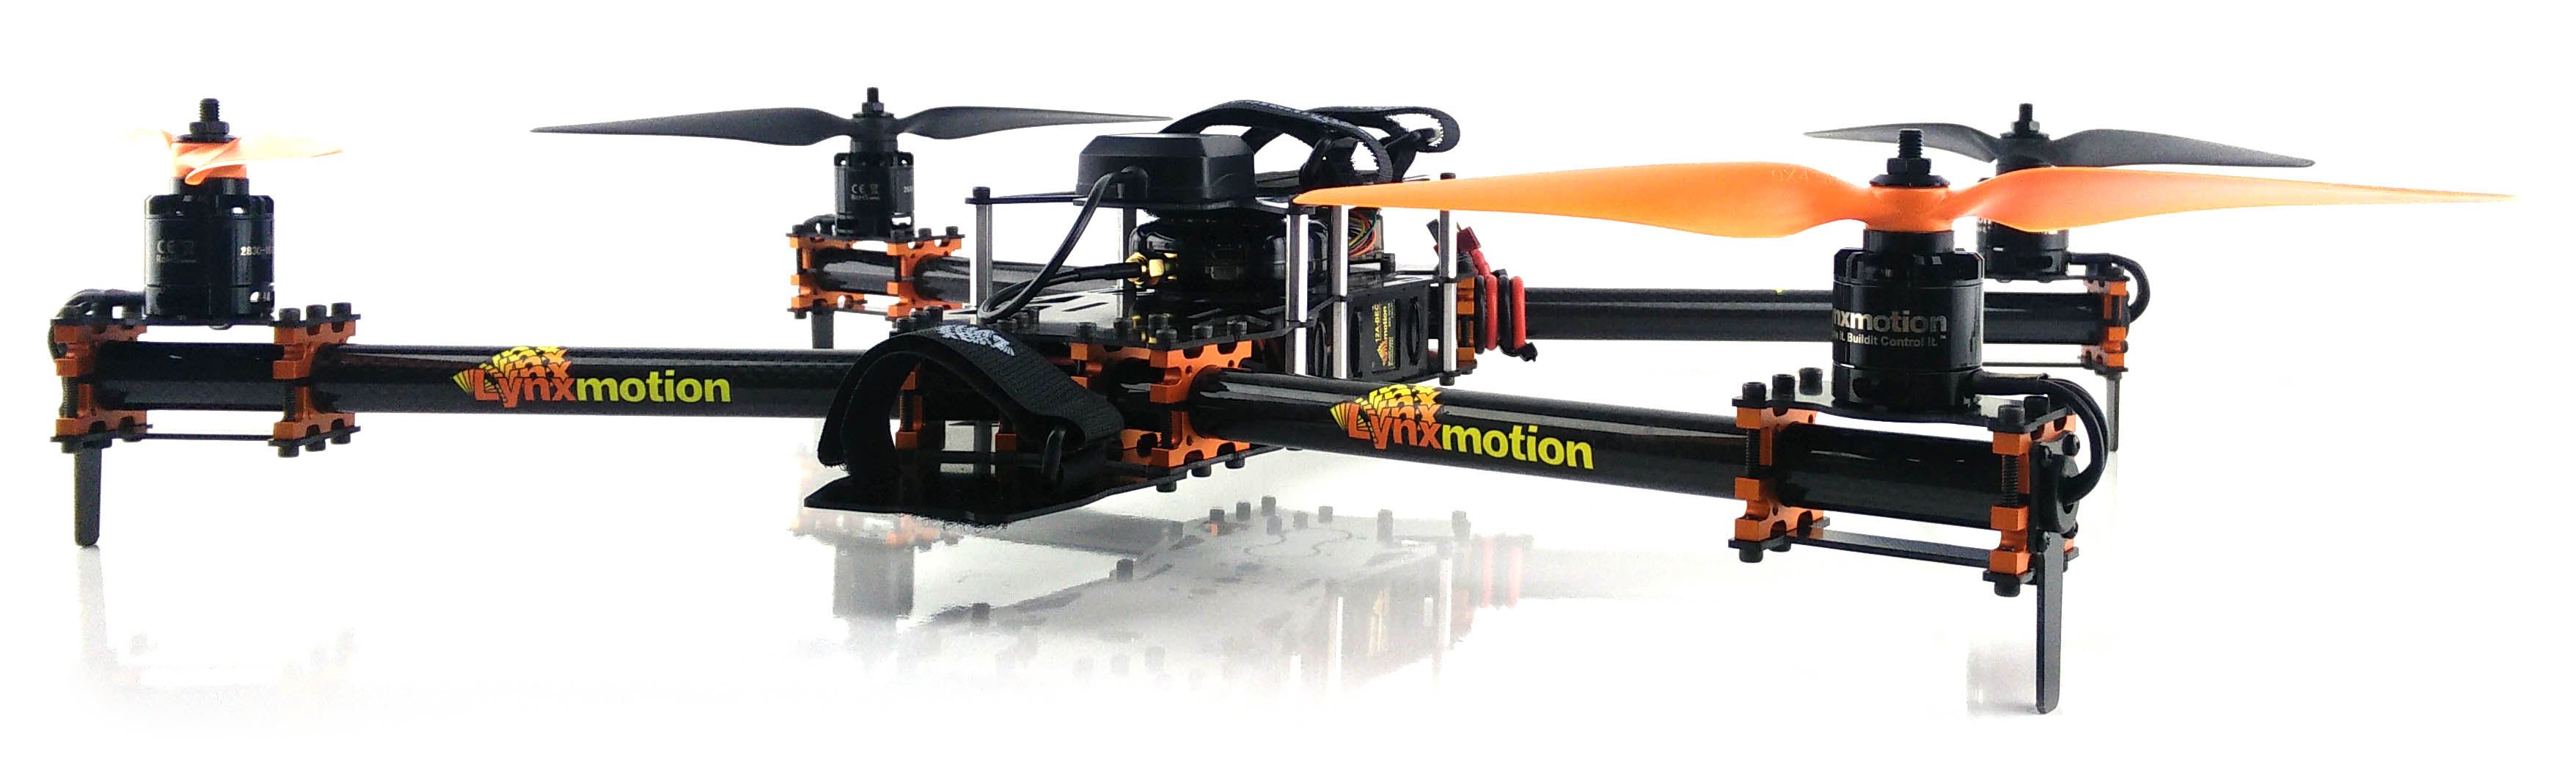 Lynxmotion HQuad500 Drohnenbausatz (nur Hardware)